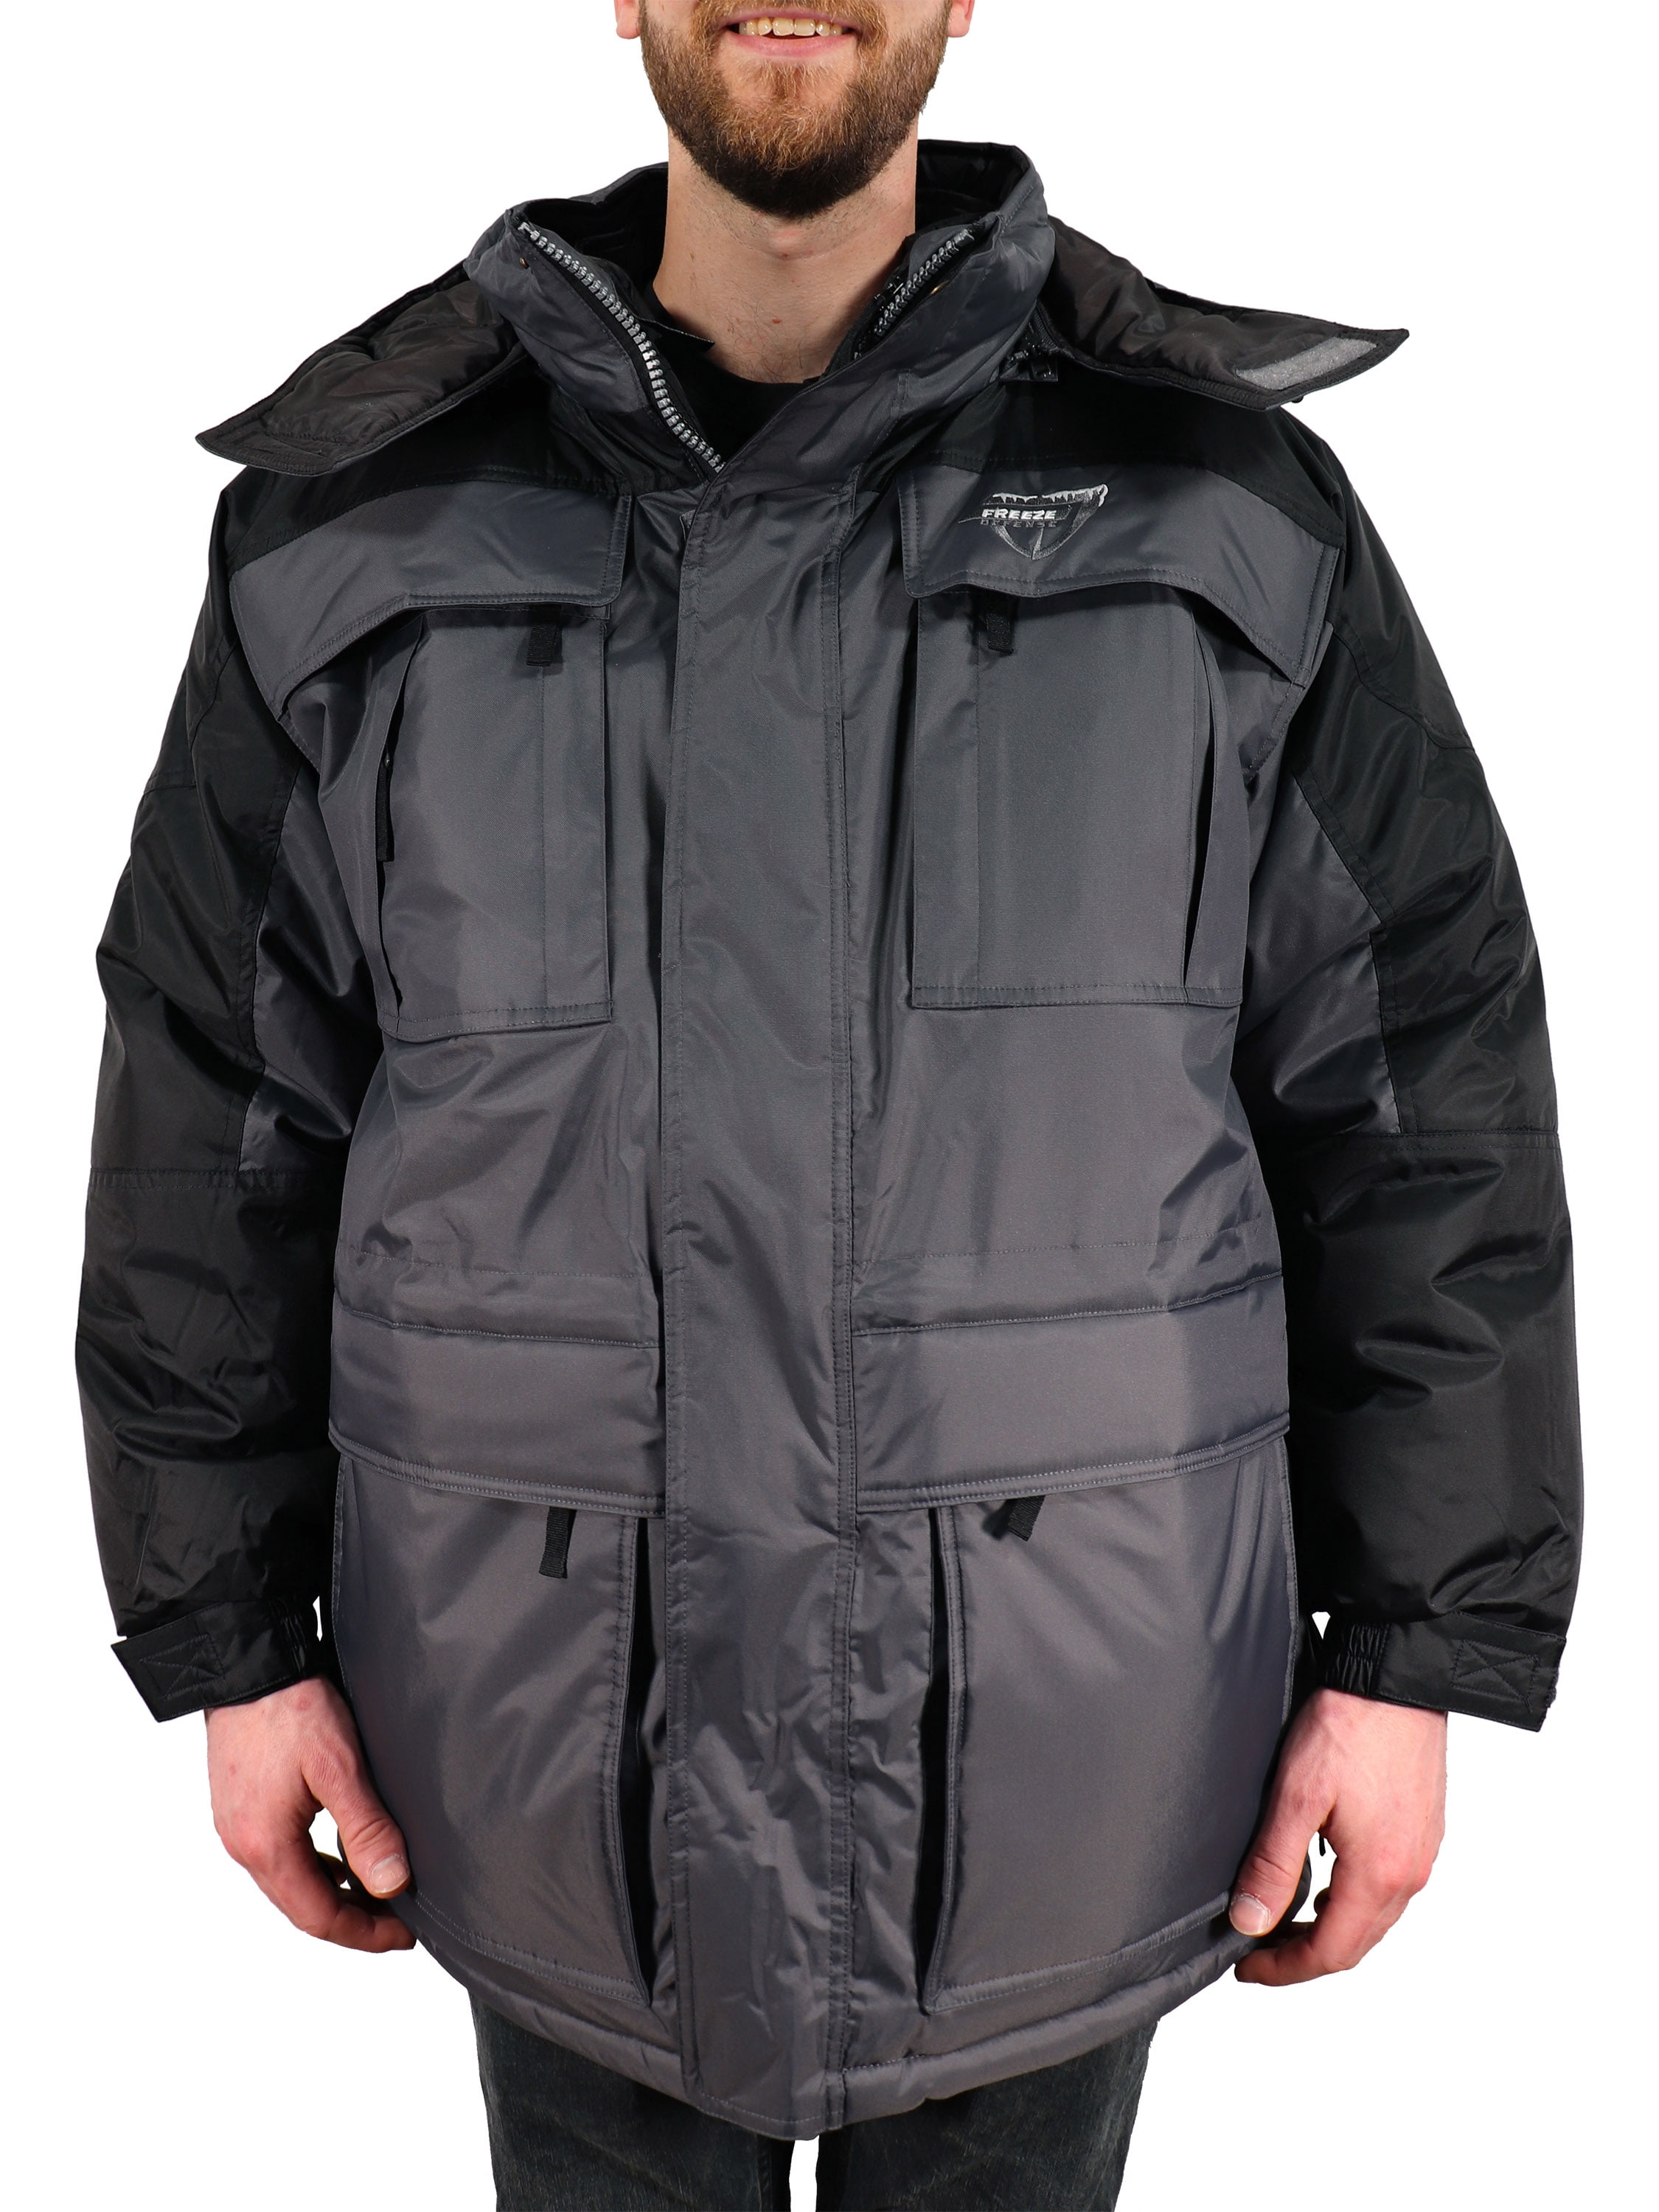 MANLUODANNI Men's Hoodie Winter Jacket Fleece Outwear Thick Warm Coats with Pockets